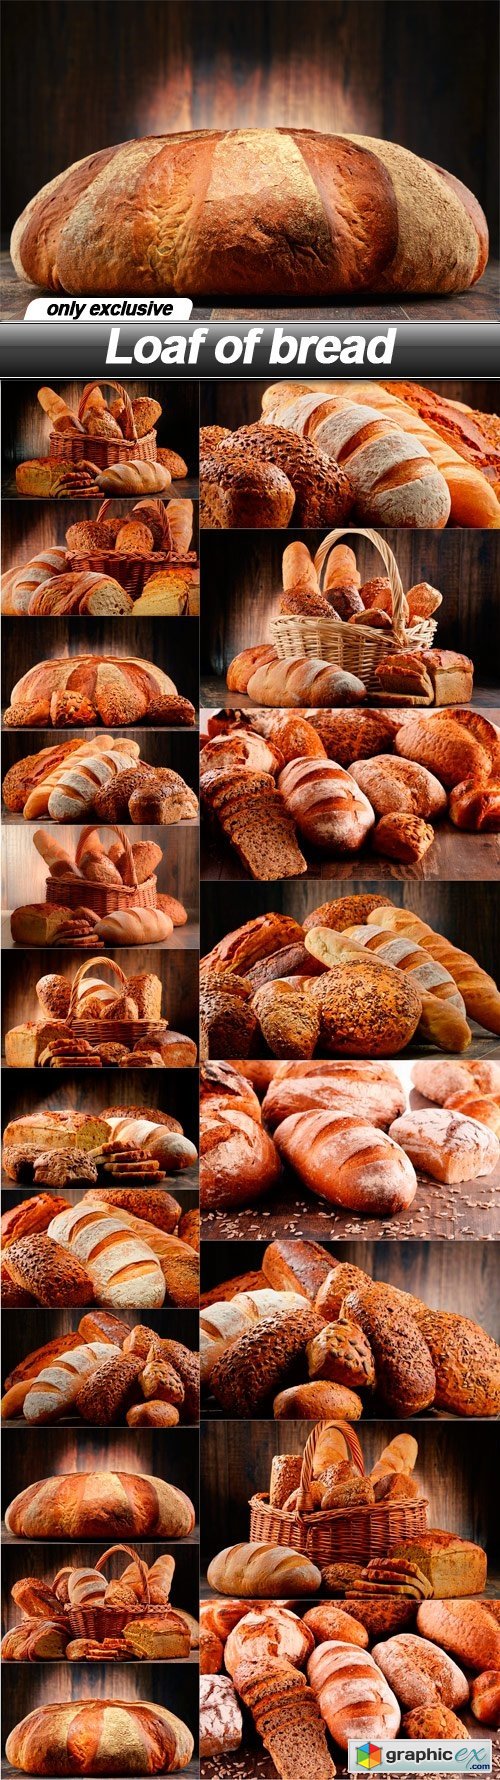 Loaf of bread - 20 UHQ JPEG